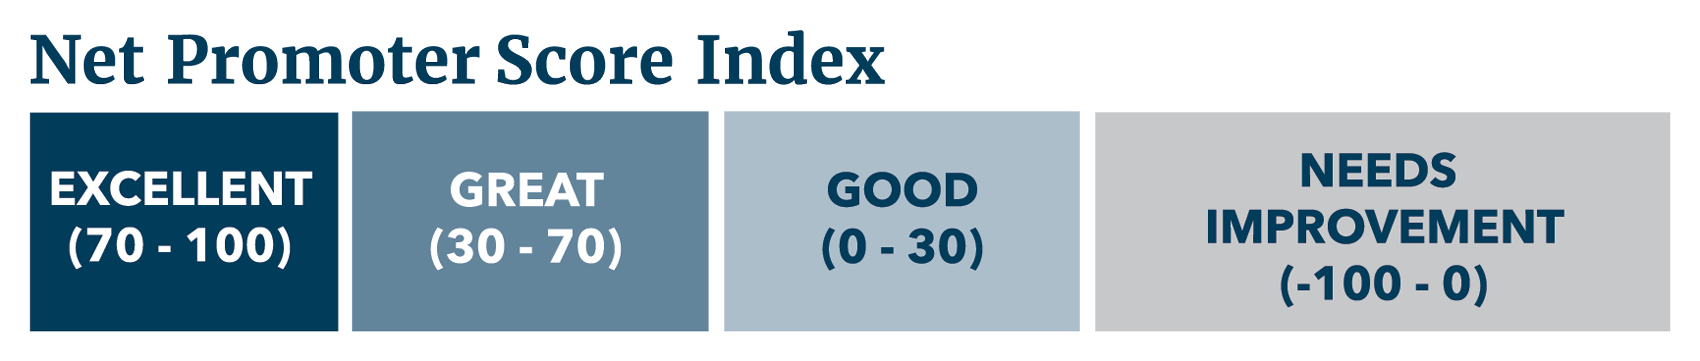 Net Promoter Score Index